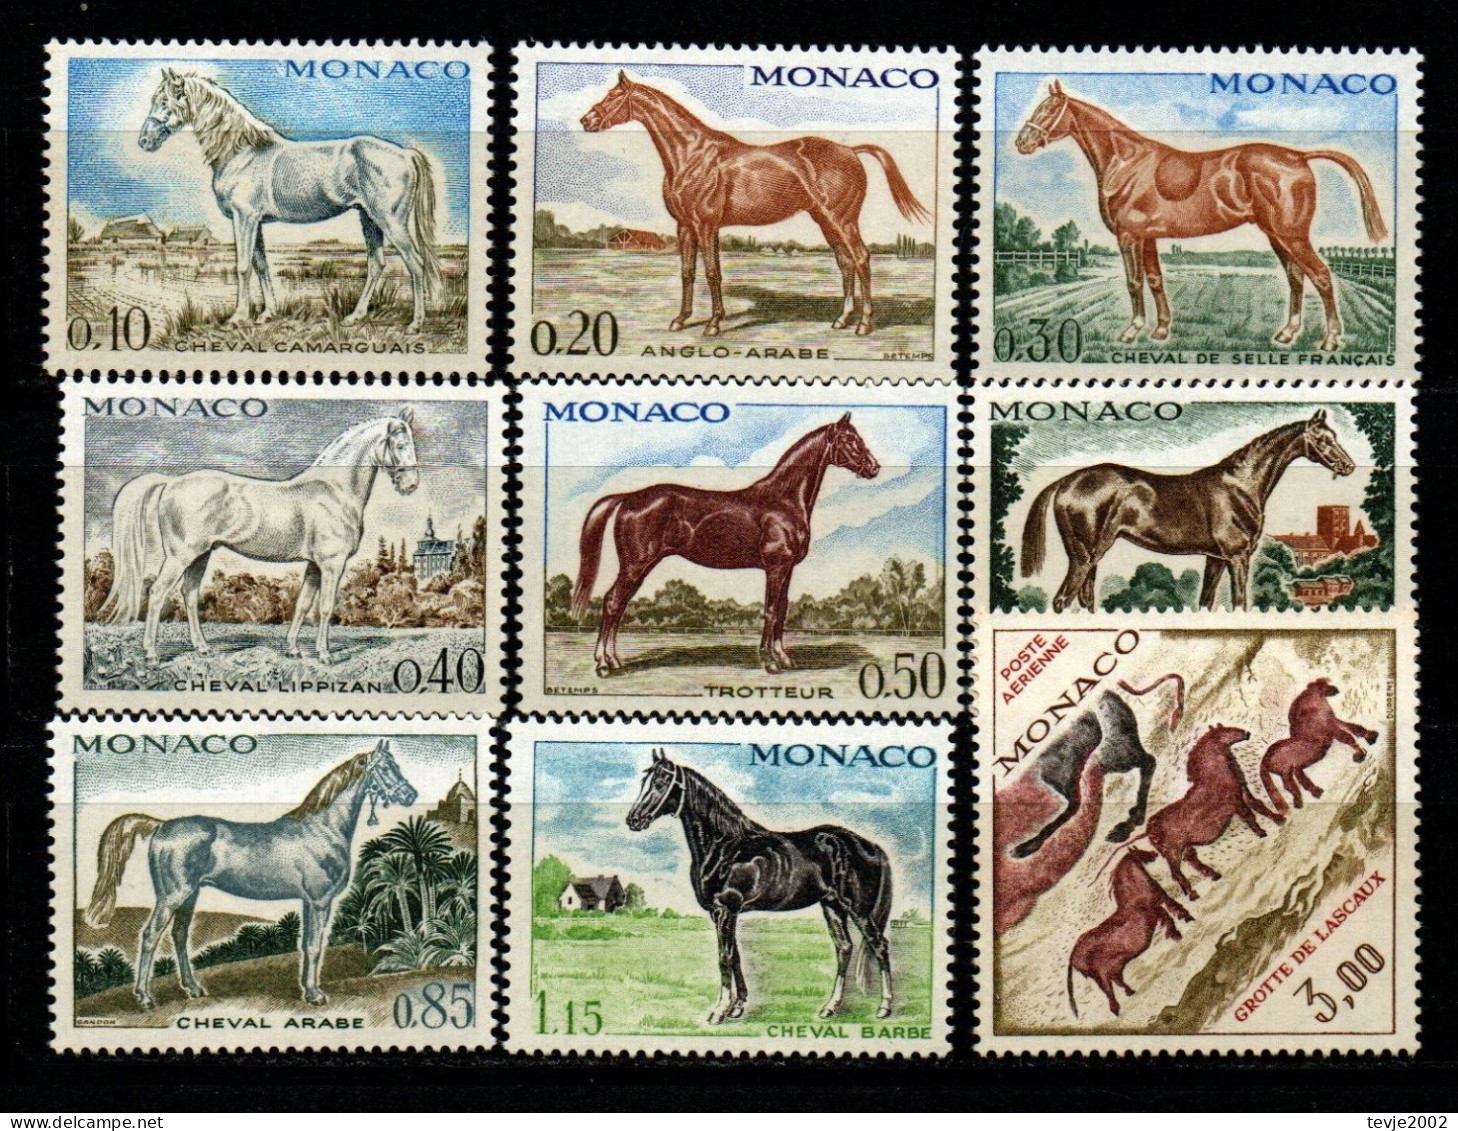 Monaco 1970 - Mi.Nr. 980 - 988 - Postfrisch MNH - Tiere Animals Pferde Horses - Horses